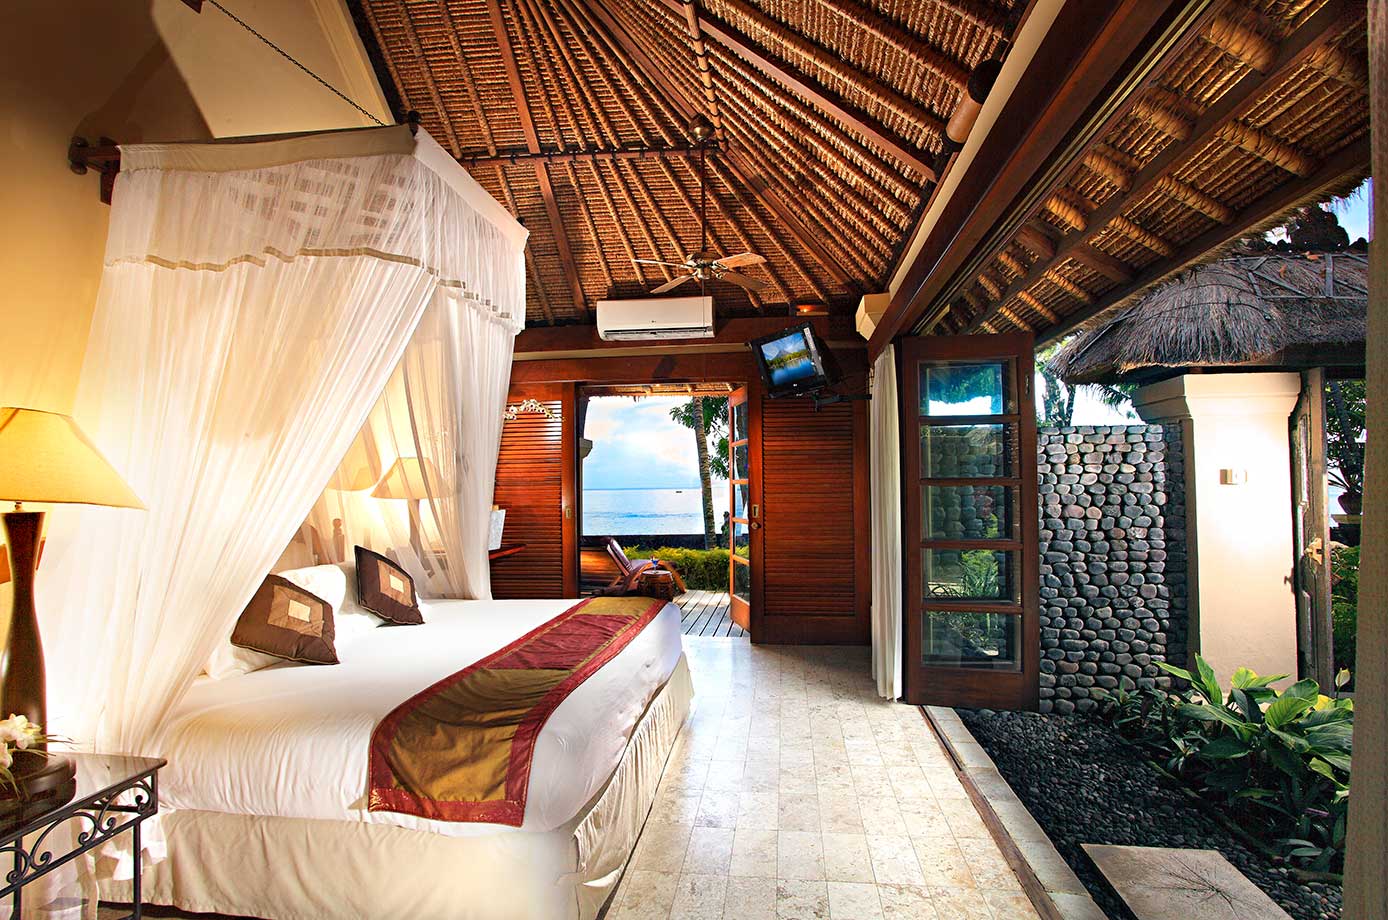 Mimpi Resort Tulamben Bali